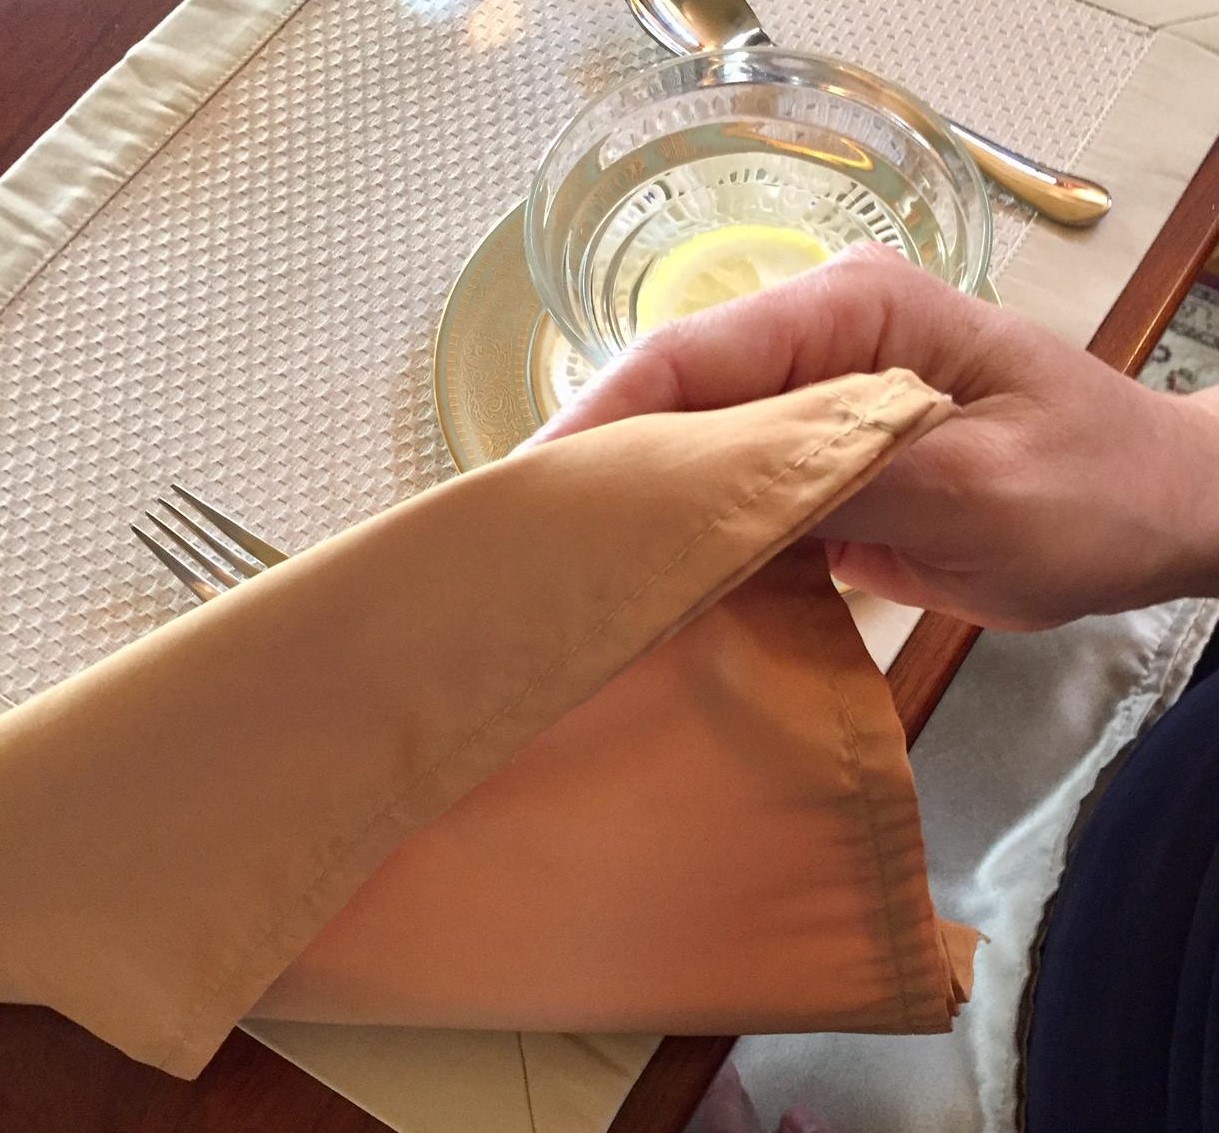 The thickness of napkins - The Intercom Blog